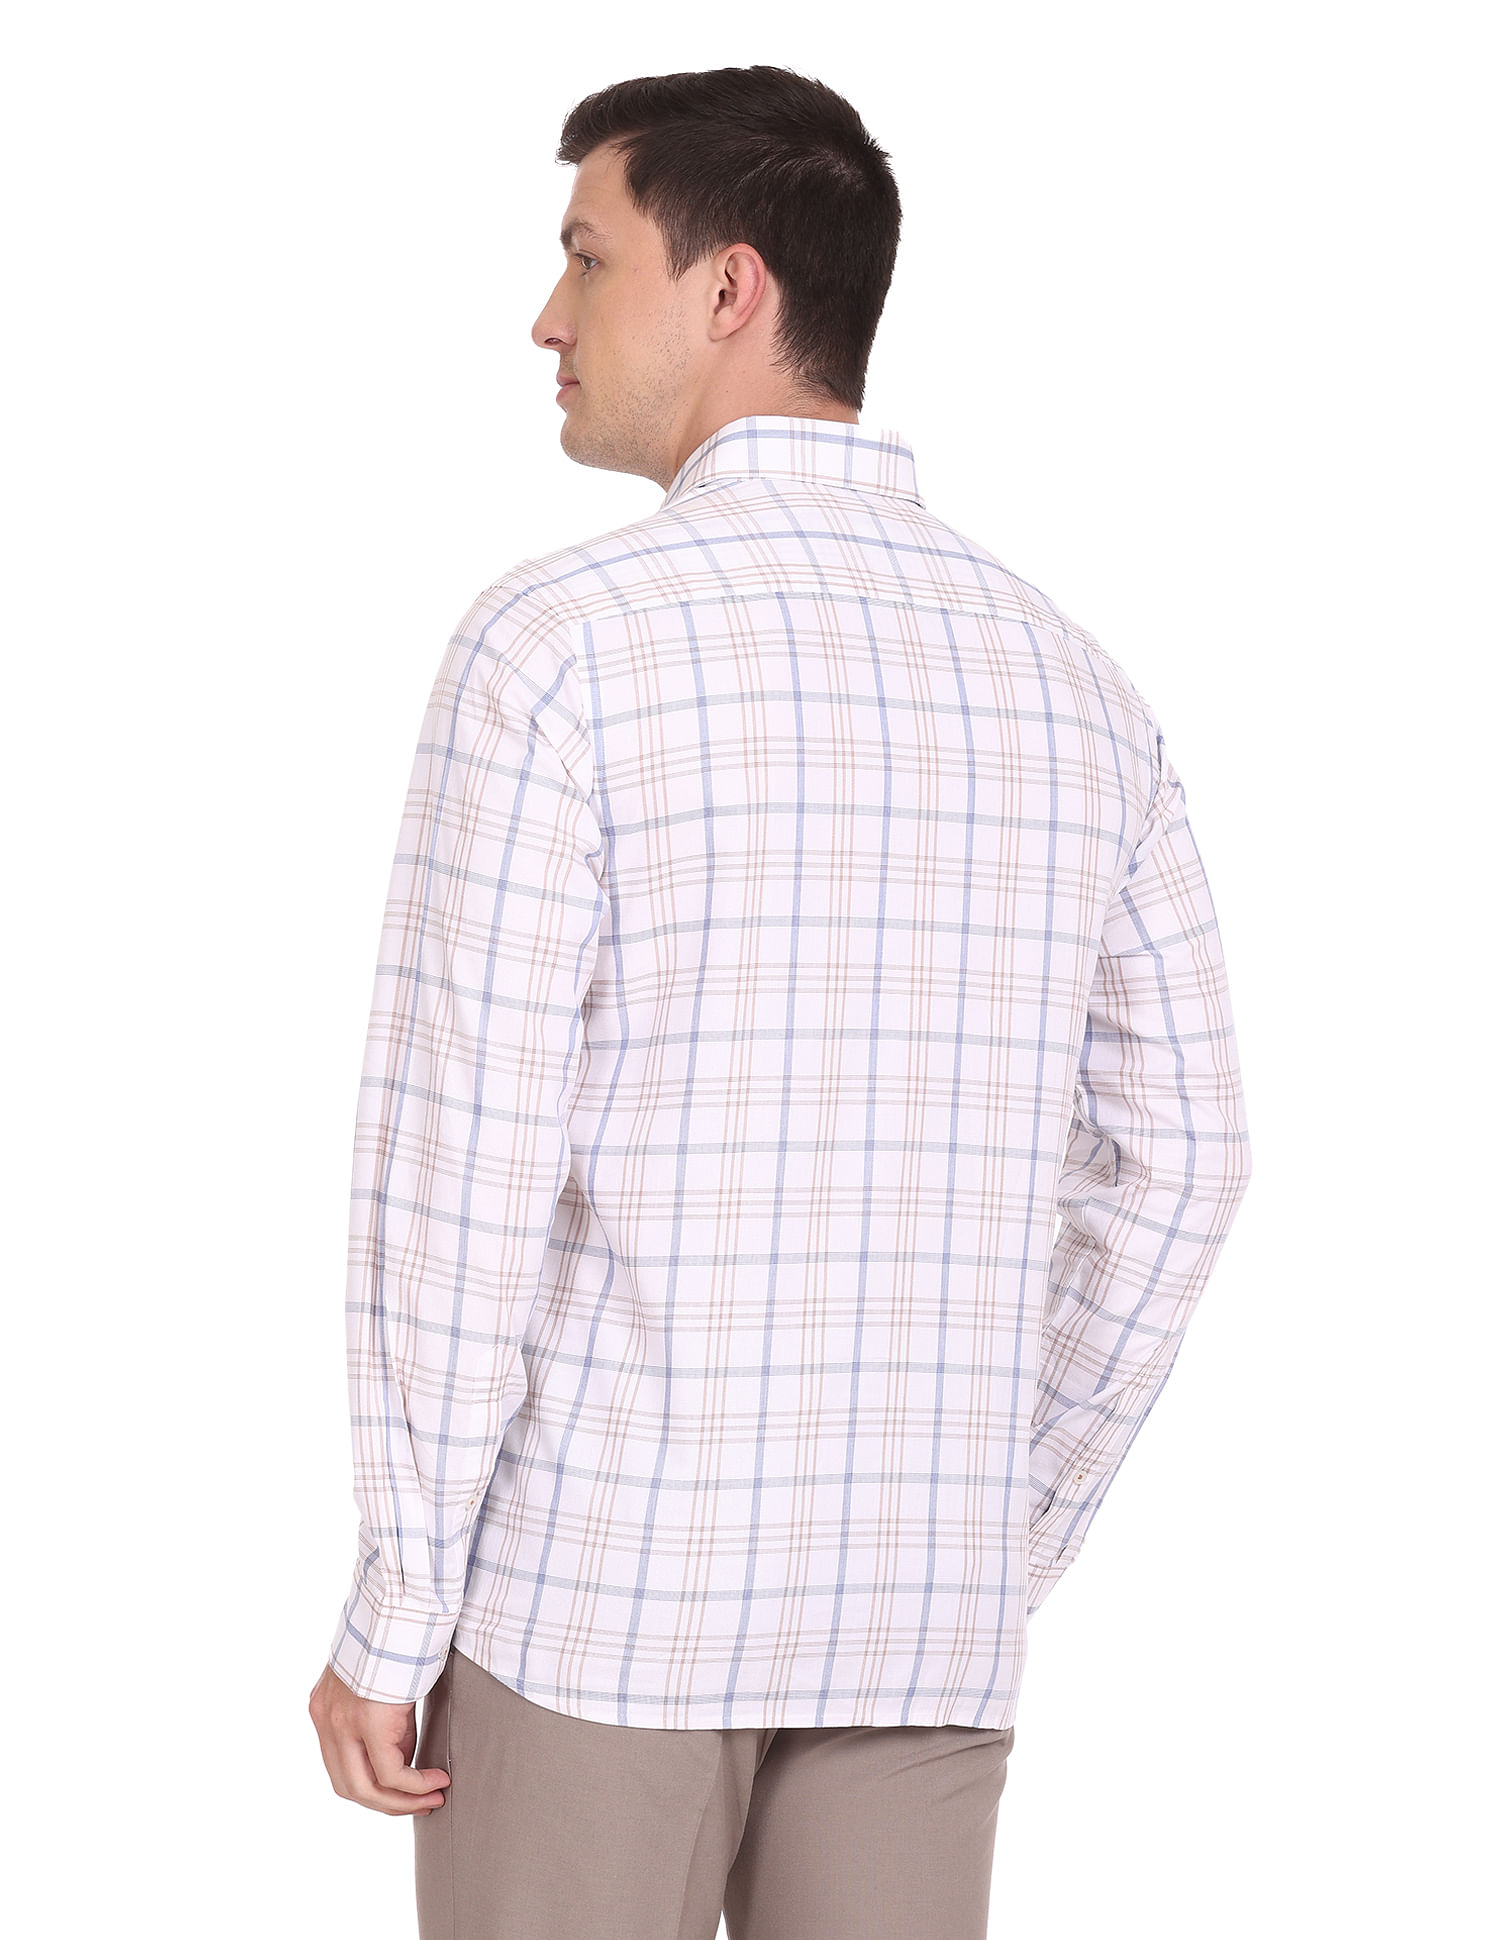 Mens Shirts Michael Kors Shirts for Men Michael Kors Linen Long Sleeve Slim Fit Shirt in Brown White Save 45% 